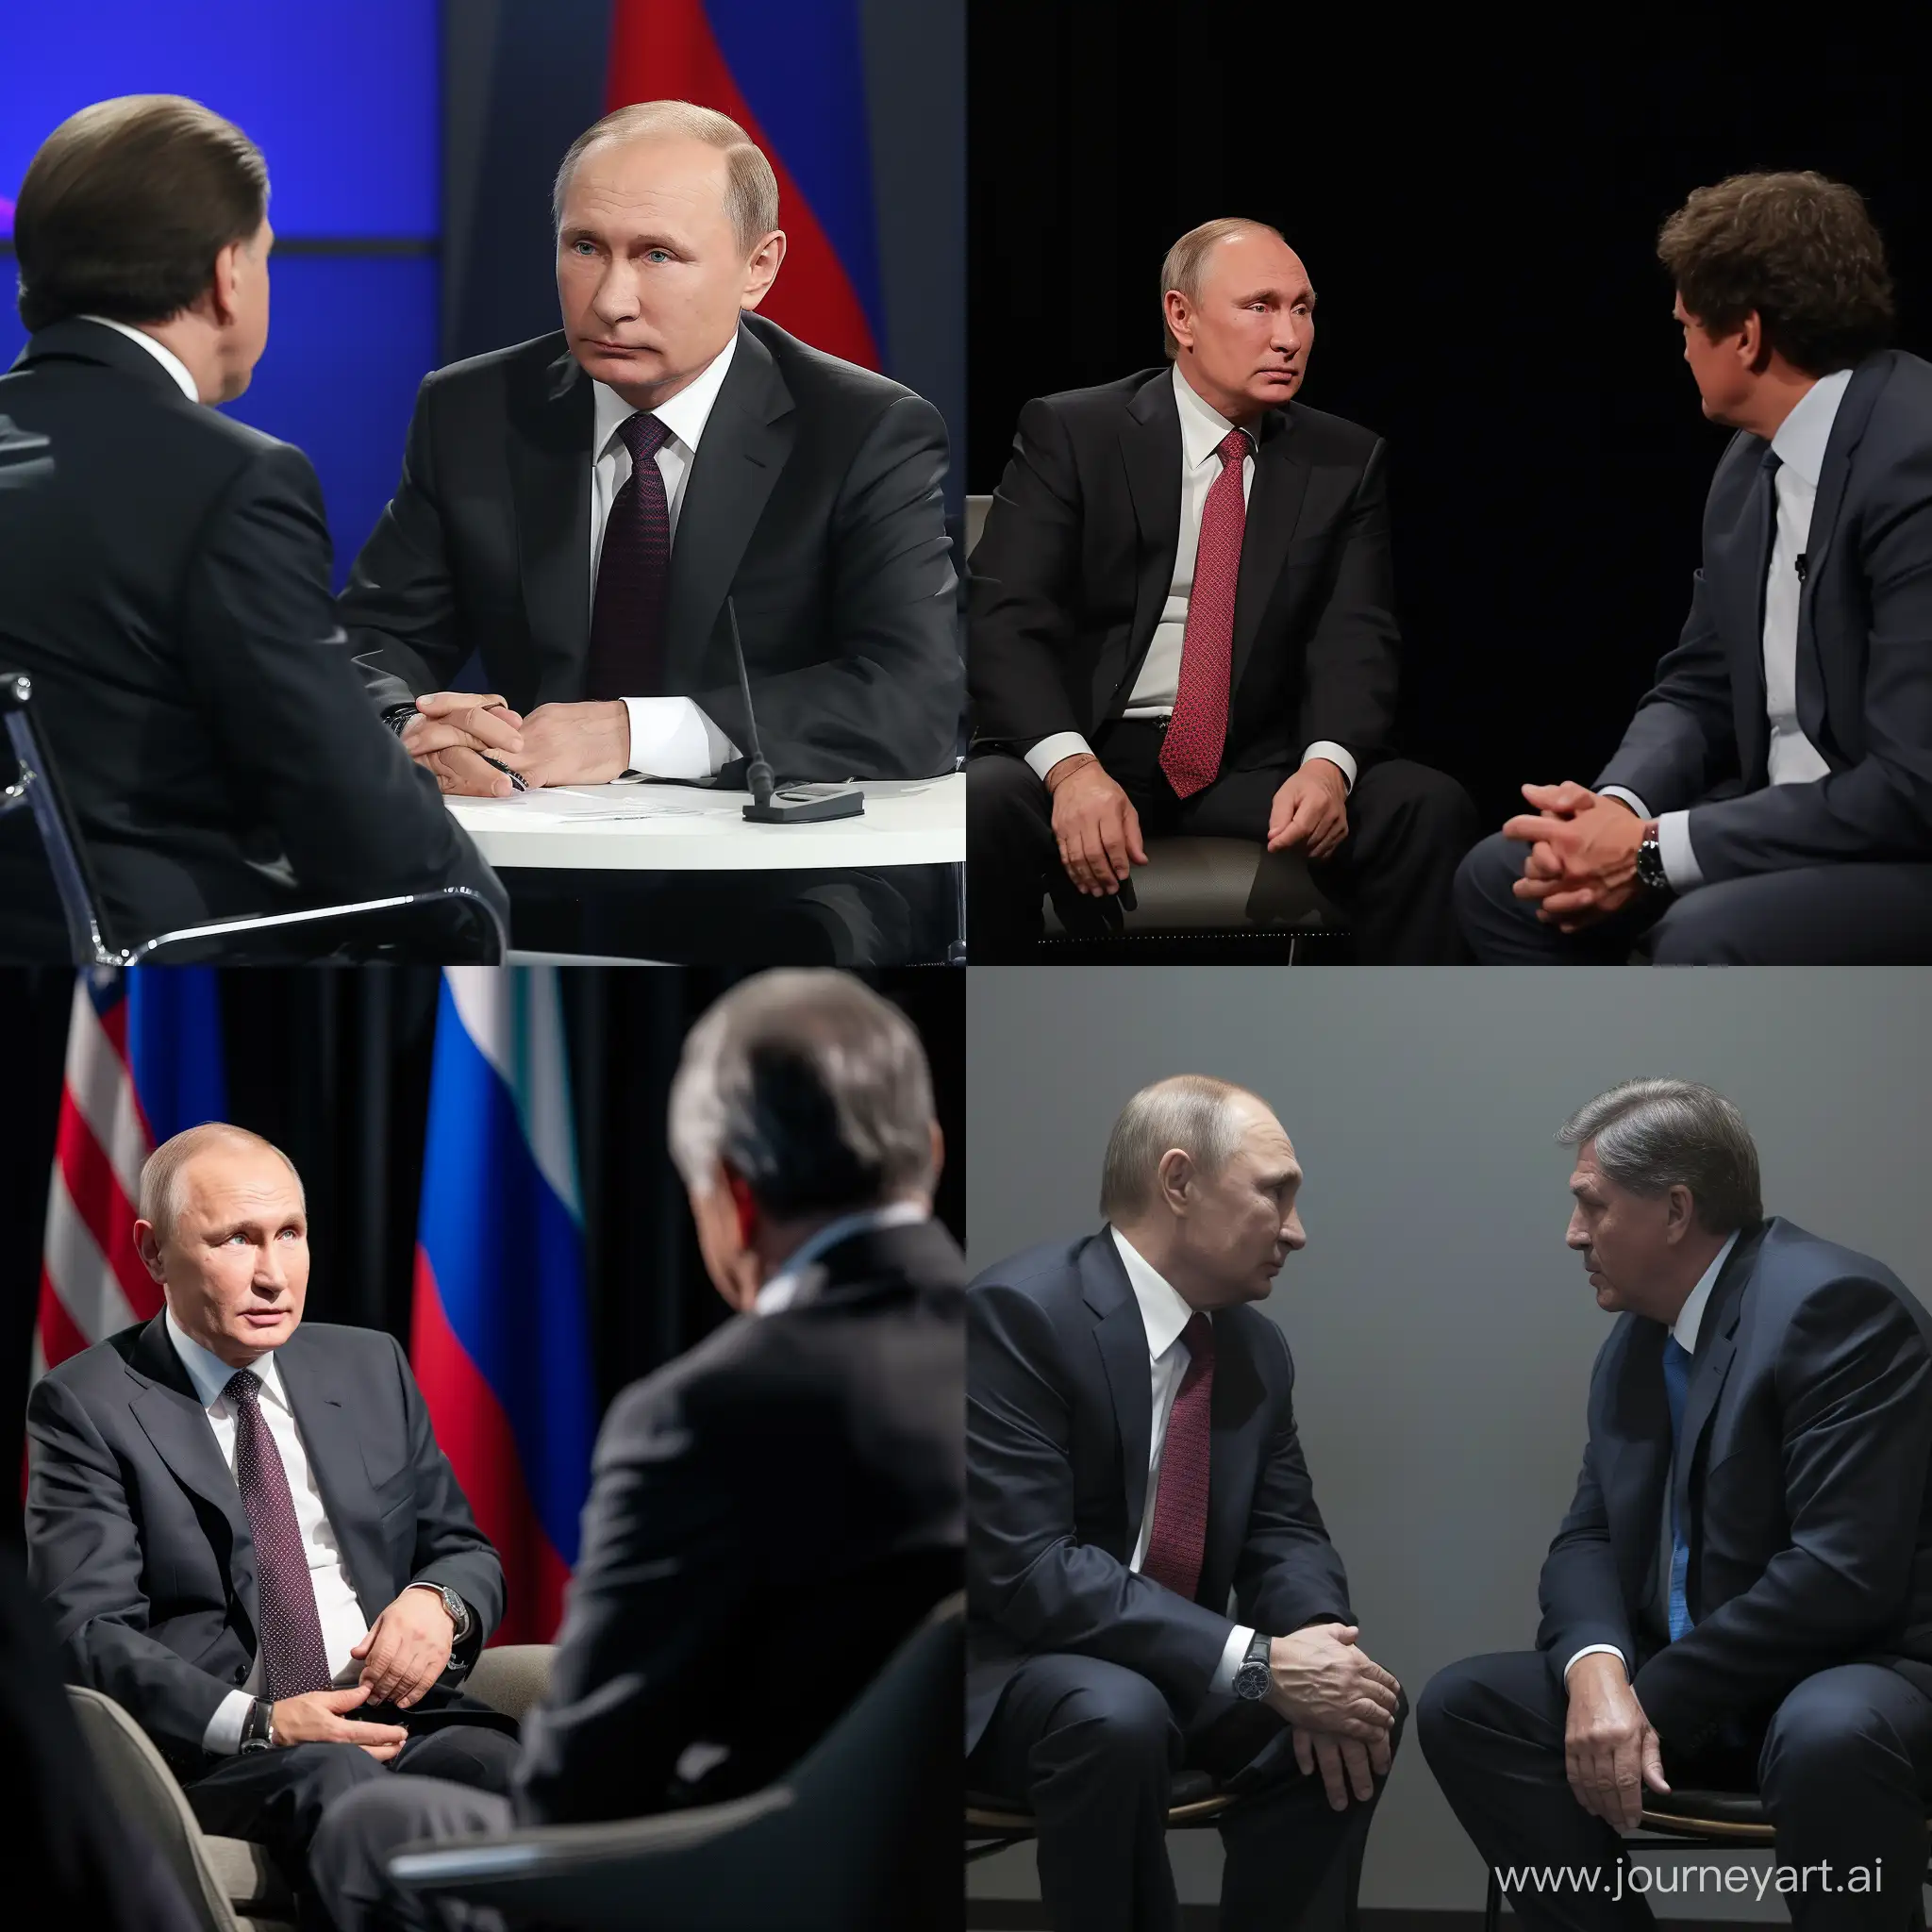 Tucker-Carlson-Interviews-Vladimir-Putin-News-Commentary-and-Diplomatic-Discourse